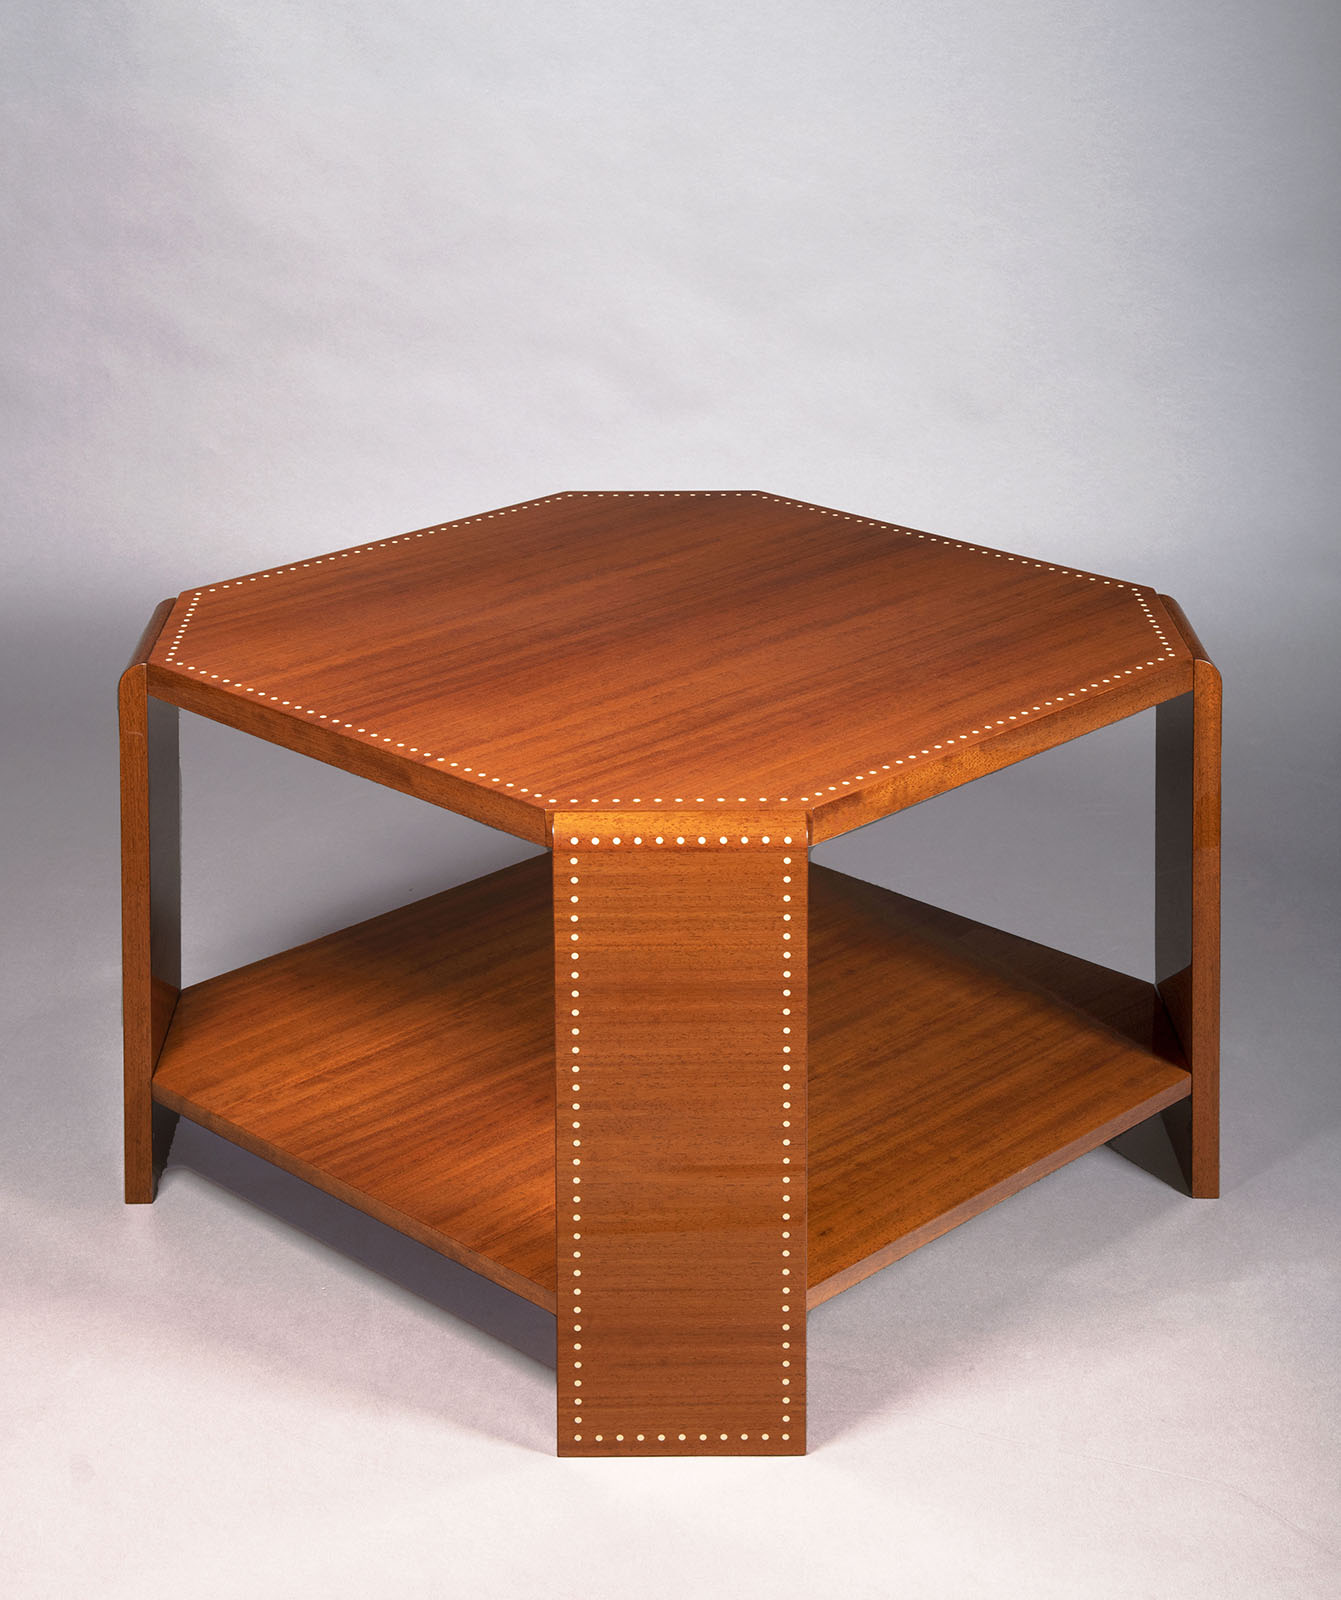 A Ruhlmann Style Coffee Table by ILIAD Design